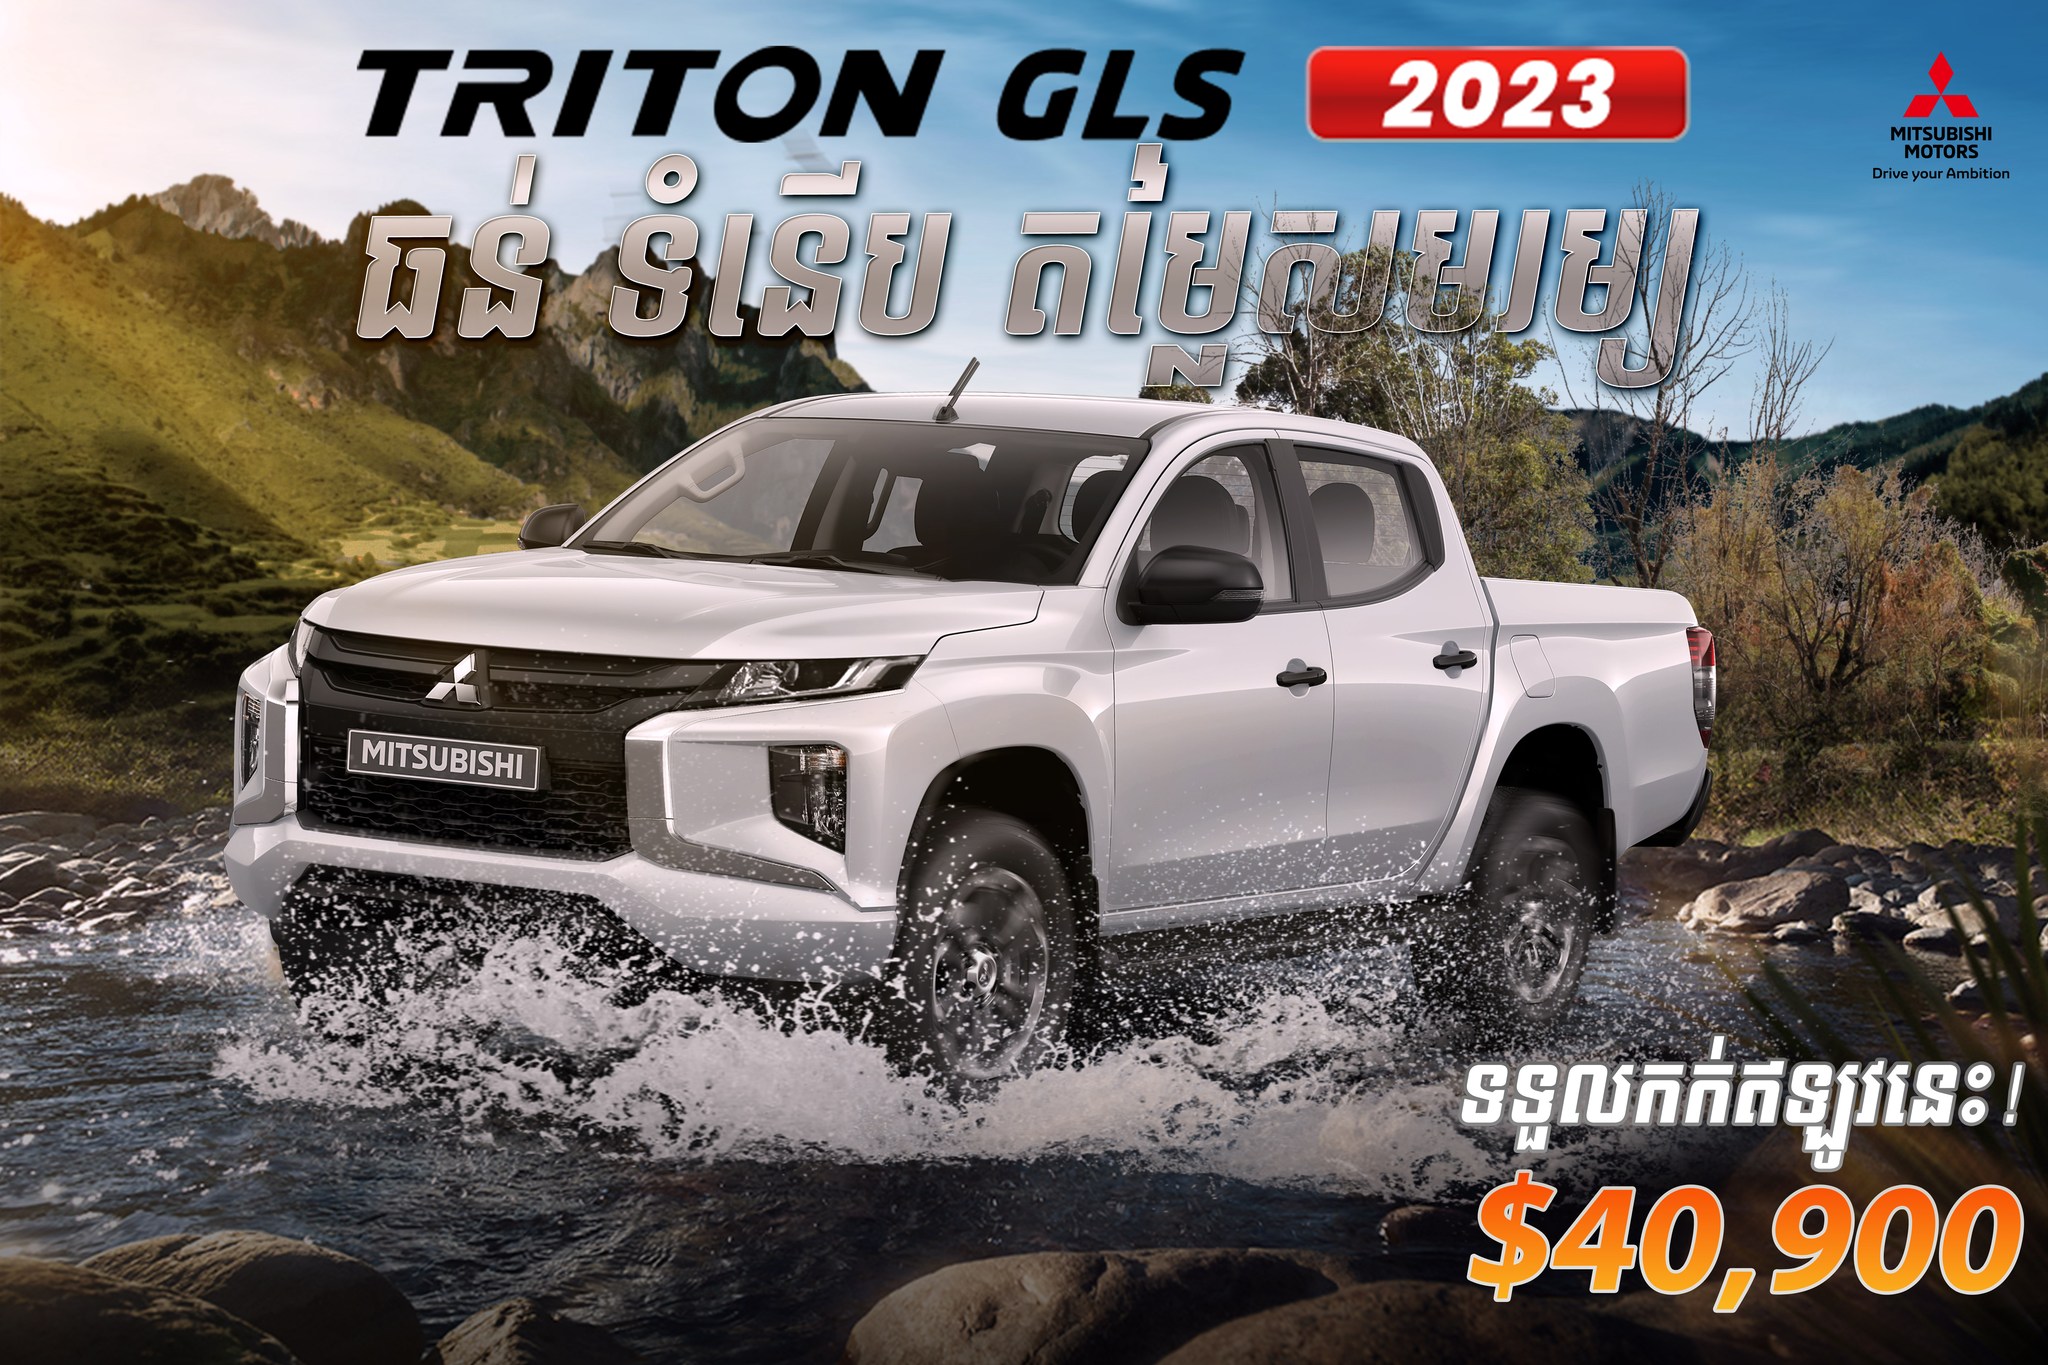 Triton GLS 2023 ចាប់ផ្តើមទទួលការកក់ហើយ!